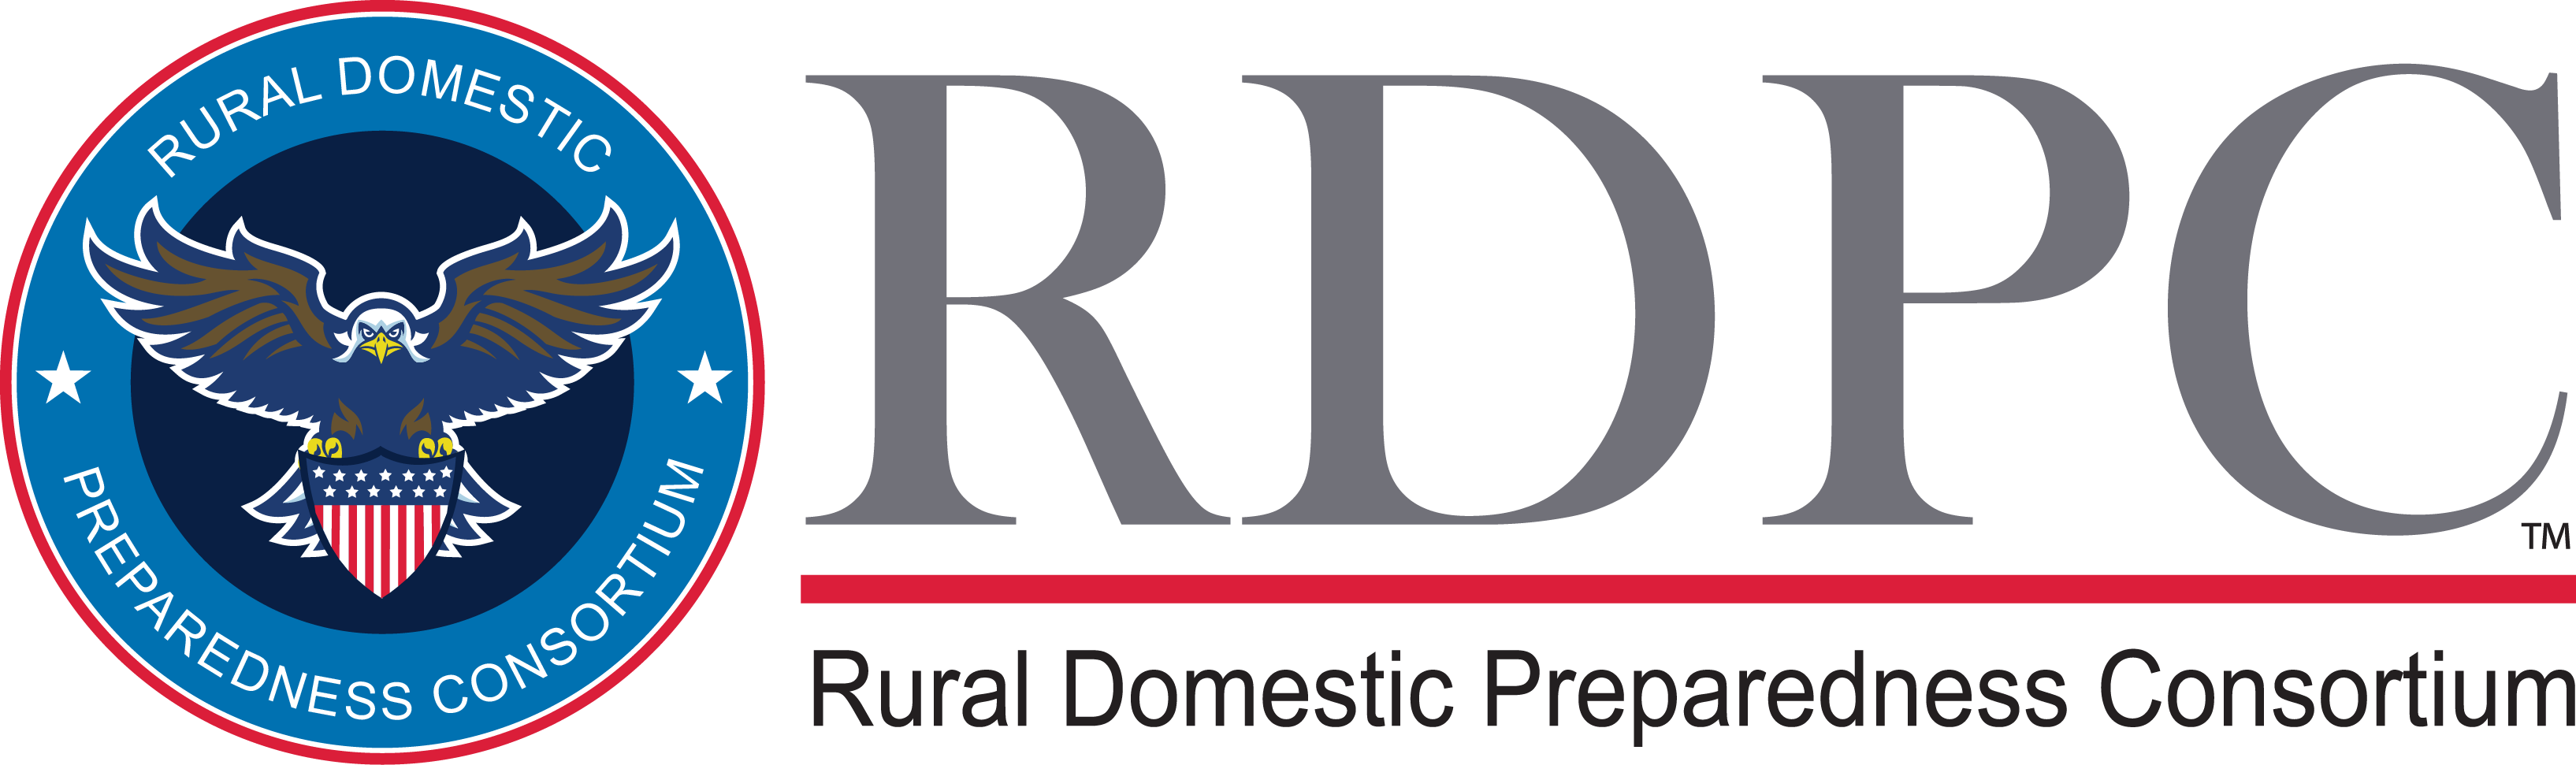 Rural Domestic Preparedness Consortium Logo 